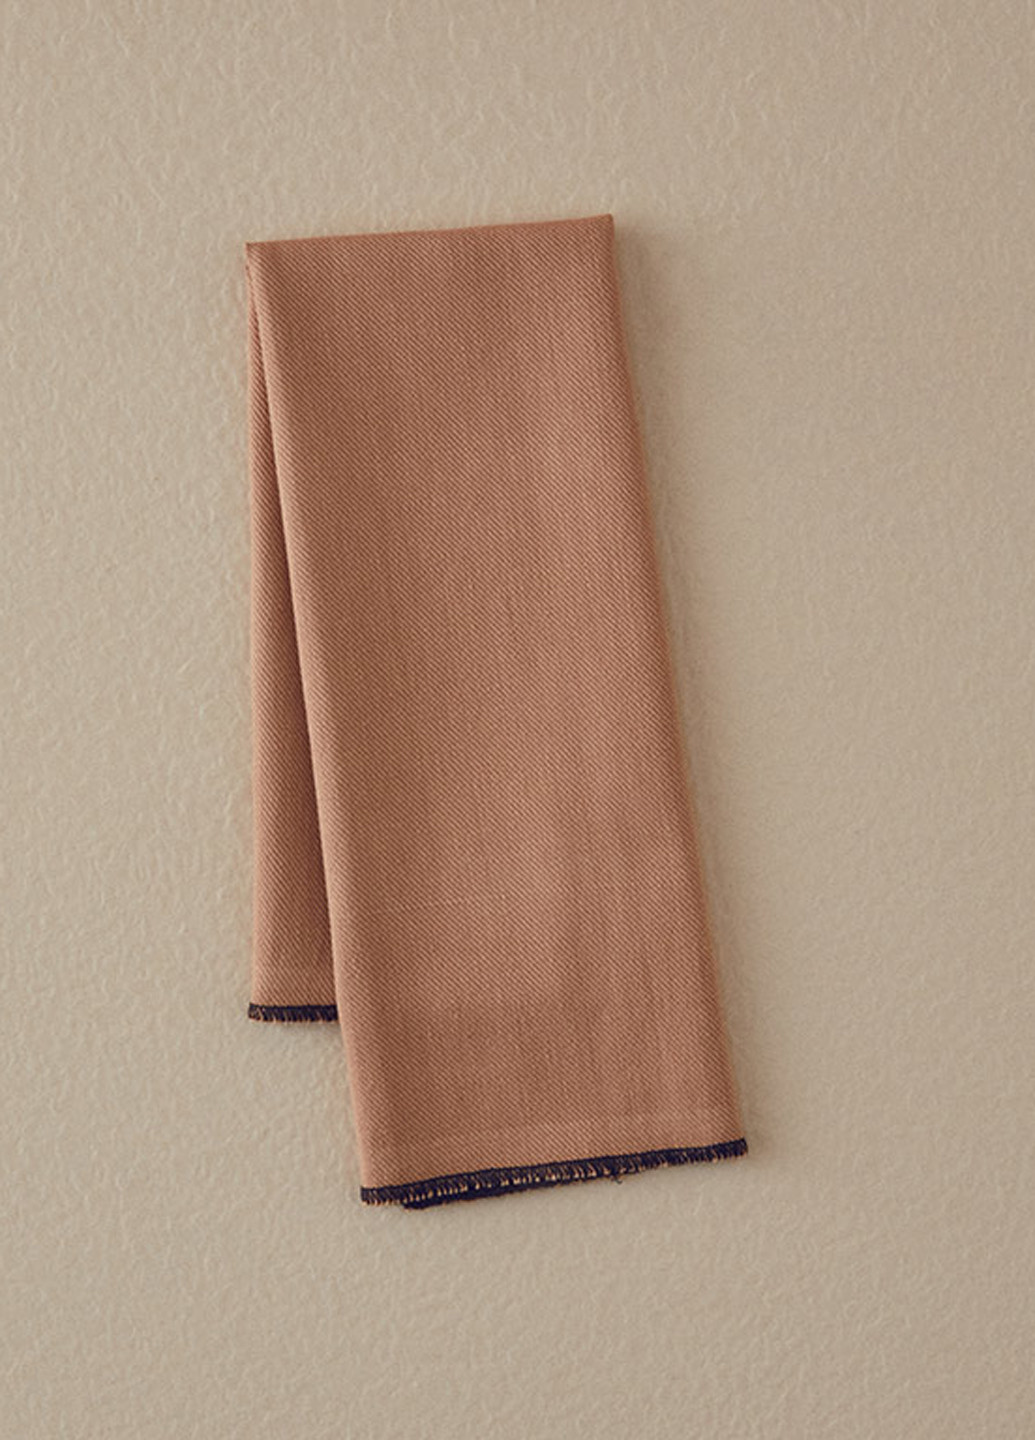 English Home полотенце, 30х50 см однотонный оранжевый производство - Турция